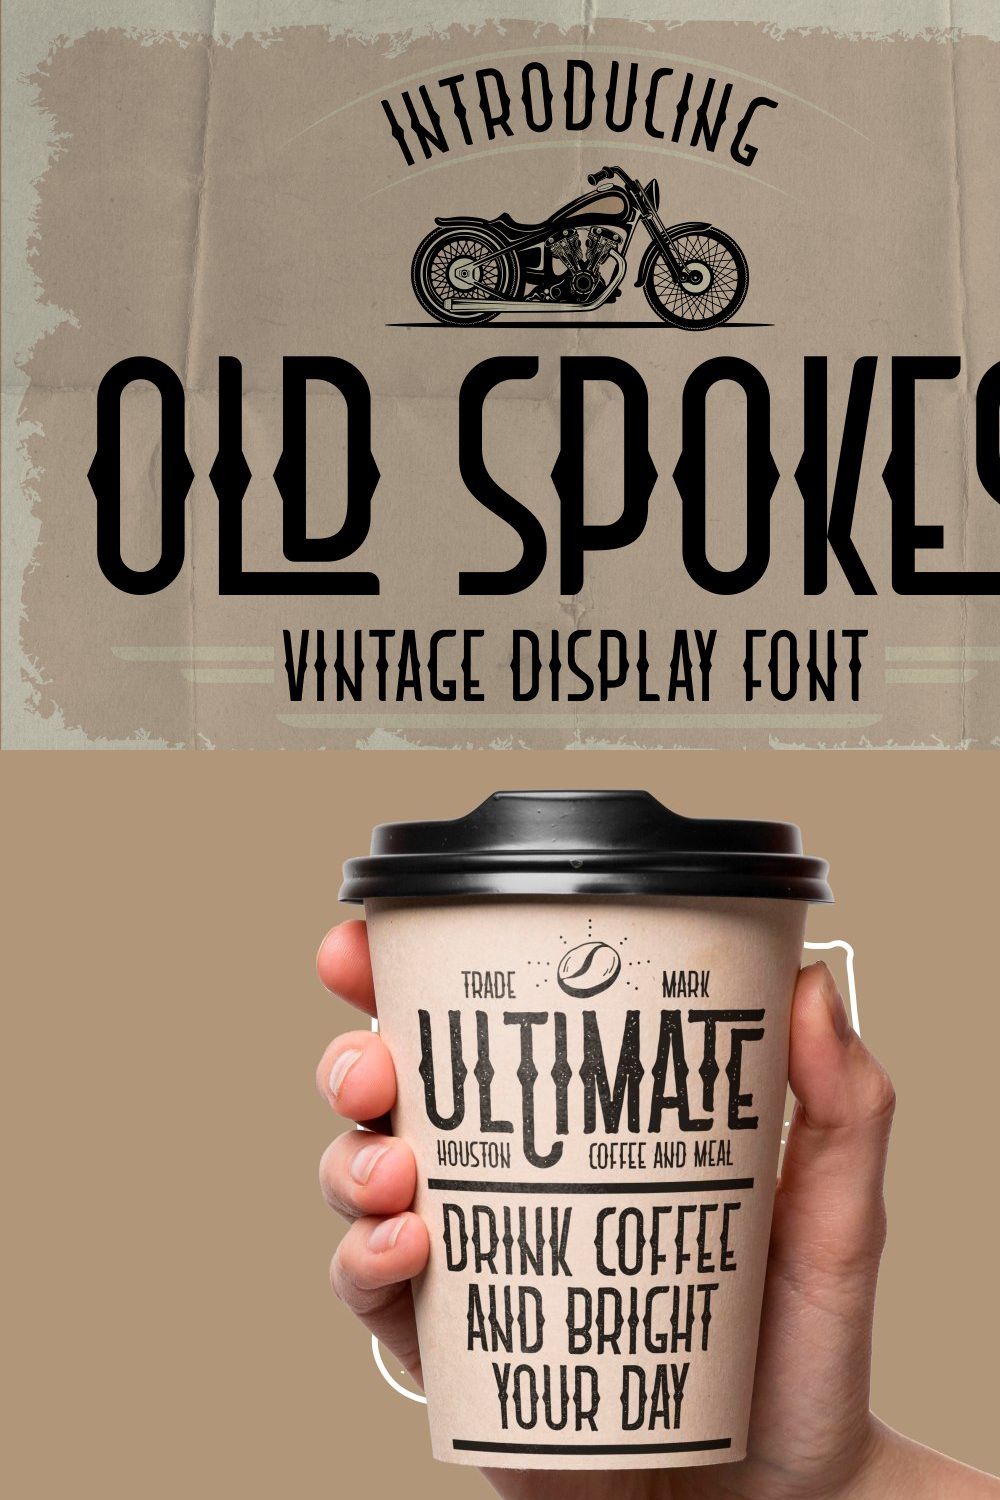 Old Spokes - Vintage Display Font pinterest preview image.